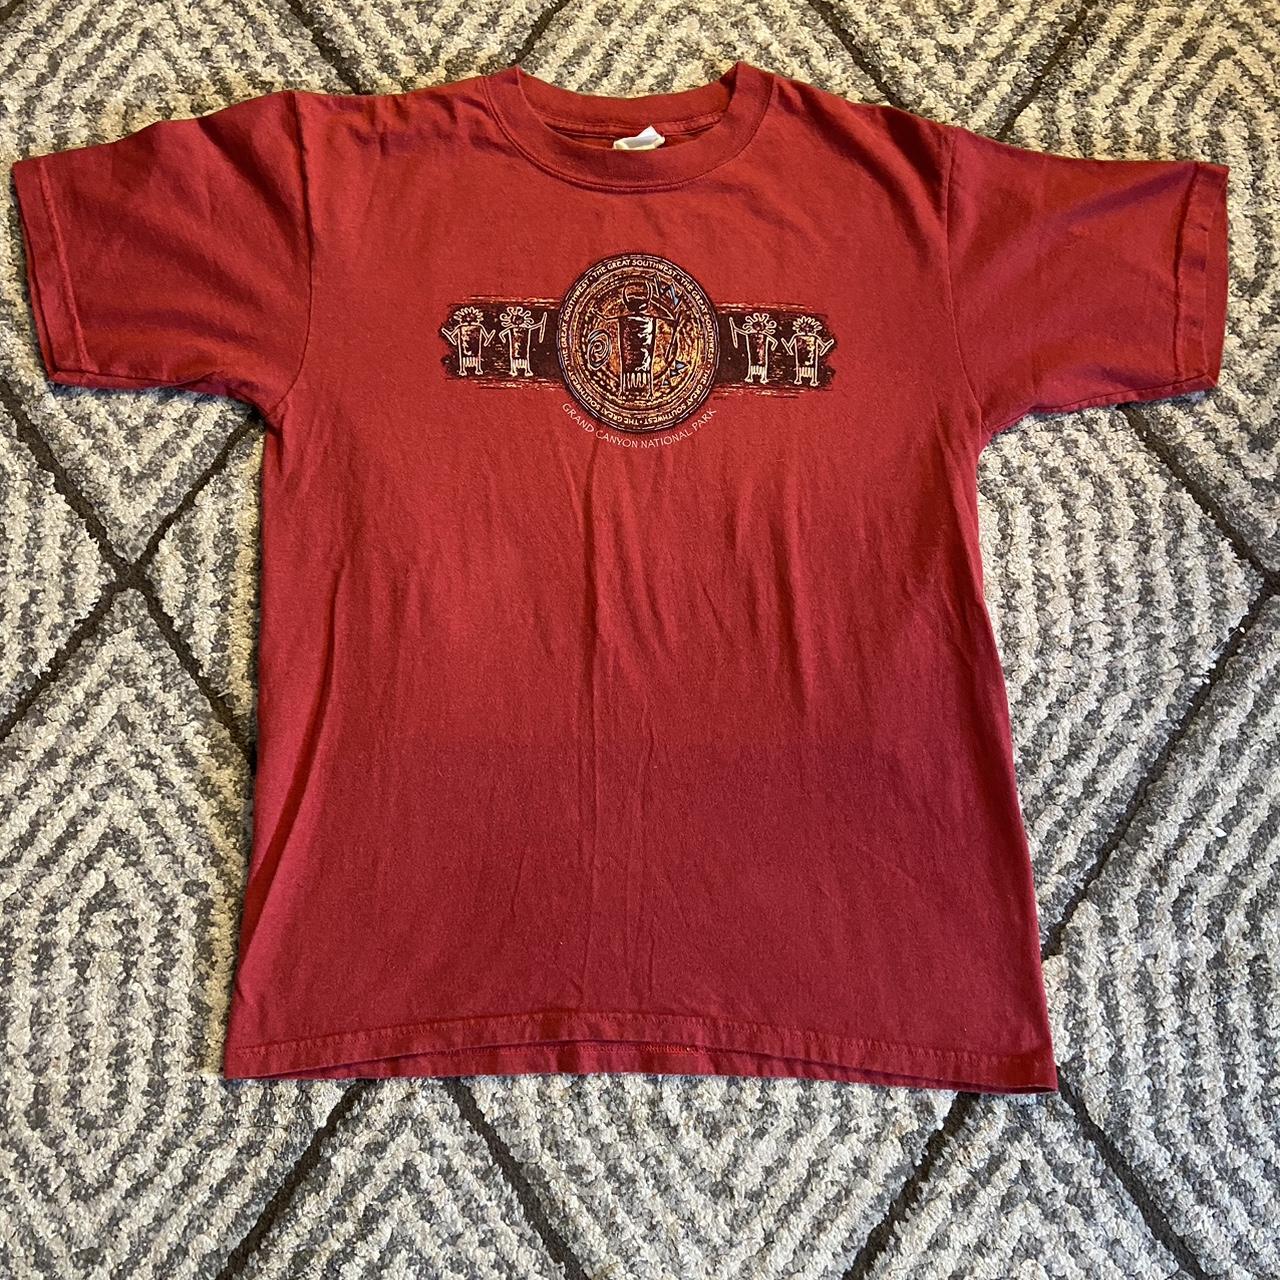 Vintage Grand Canyon national park shirt. Made in... - Depop